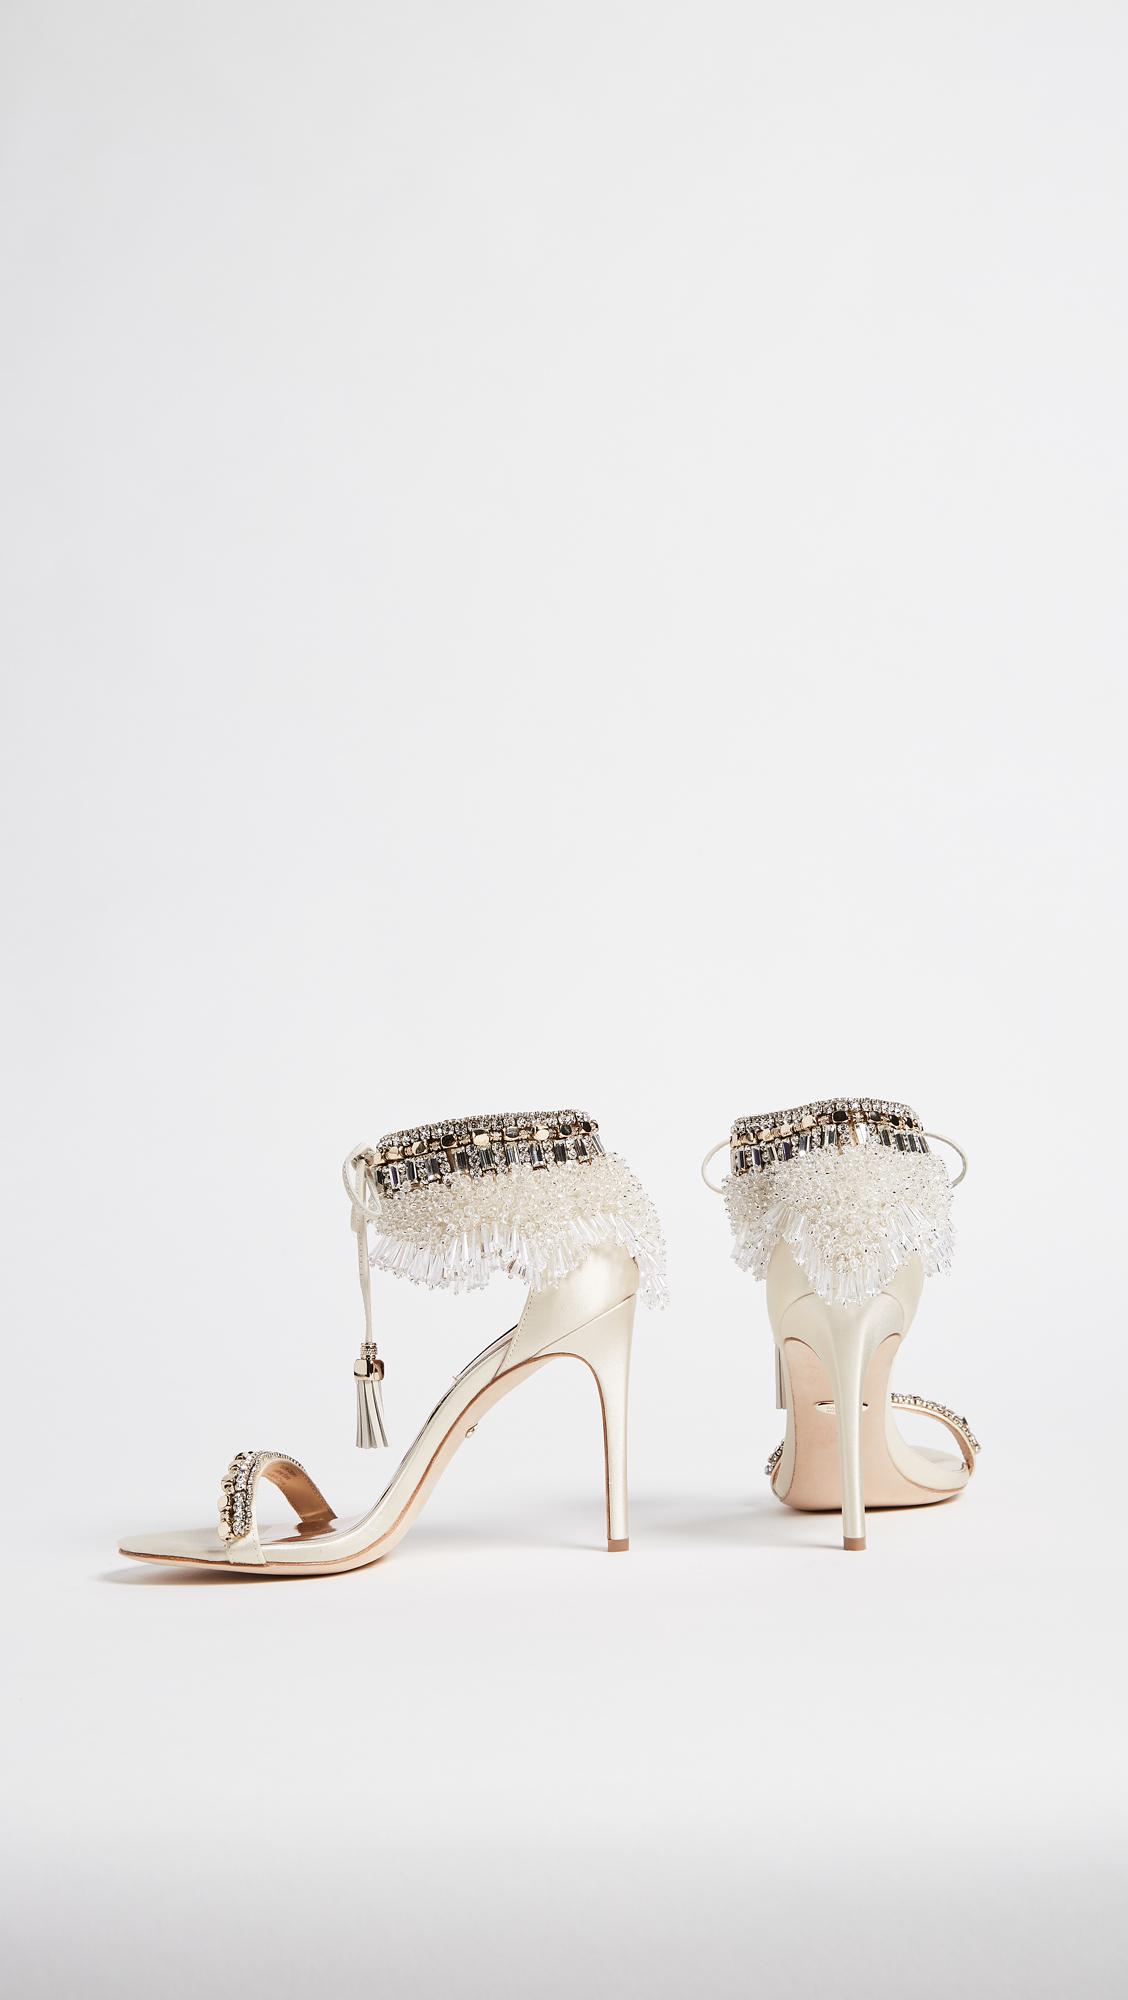 Badgley Mischka Satin Katrina Embellished Sandals in Ivory (White) - Lyst